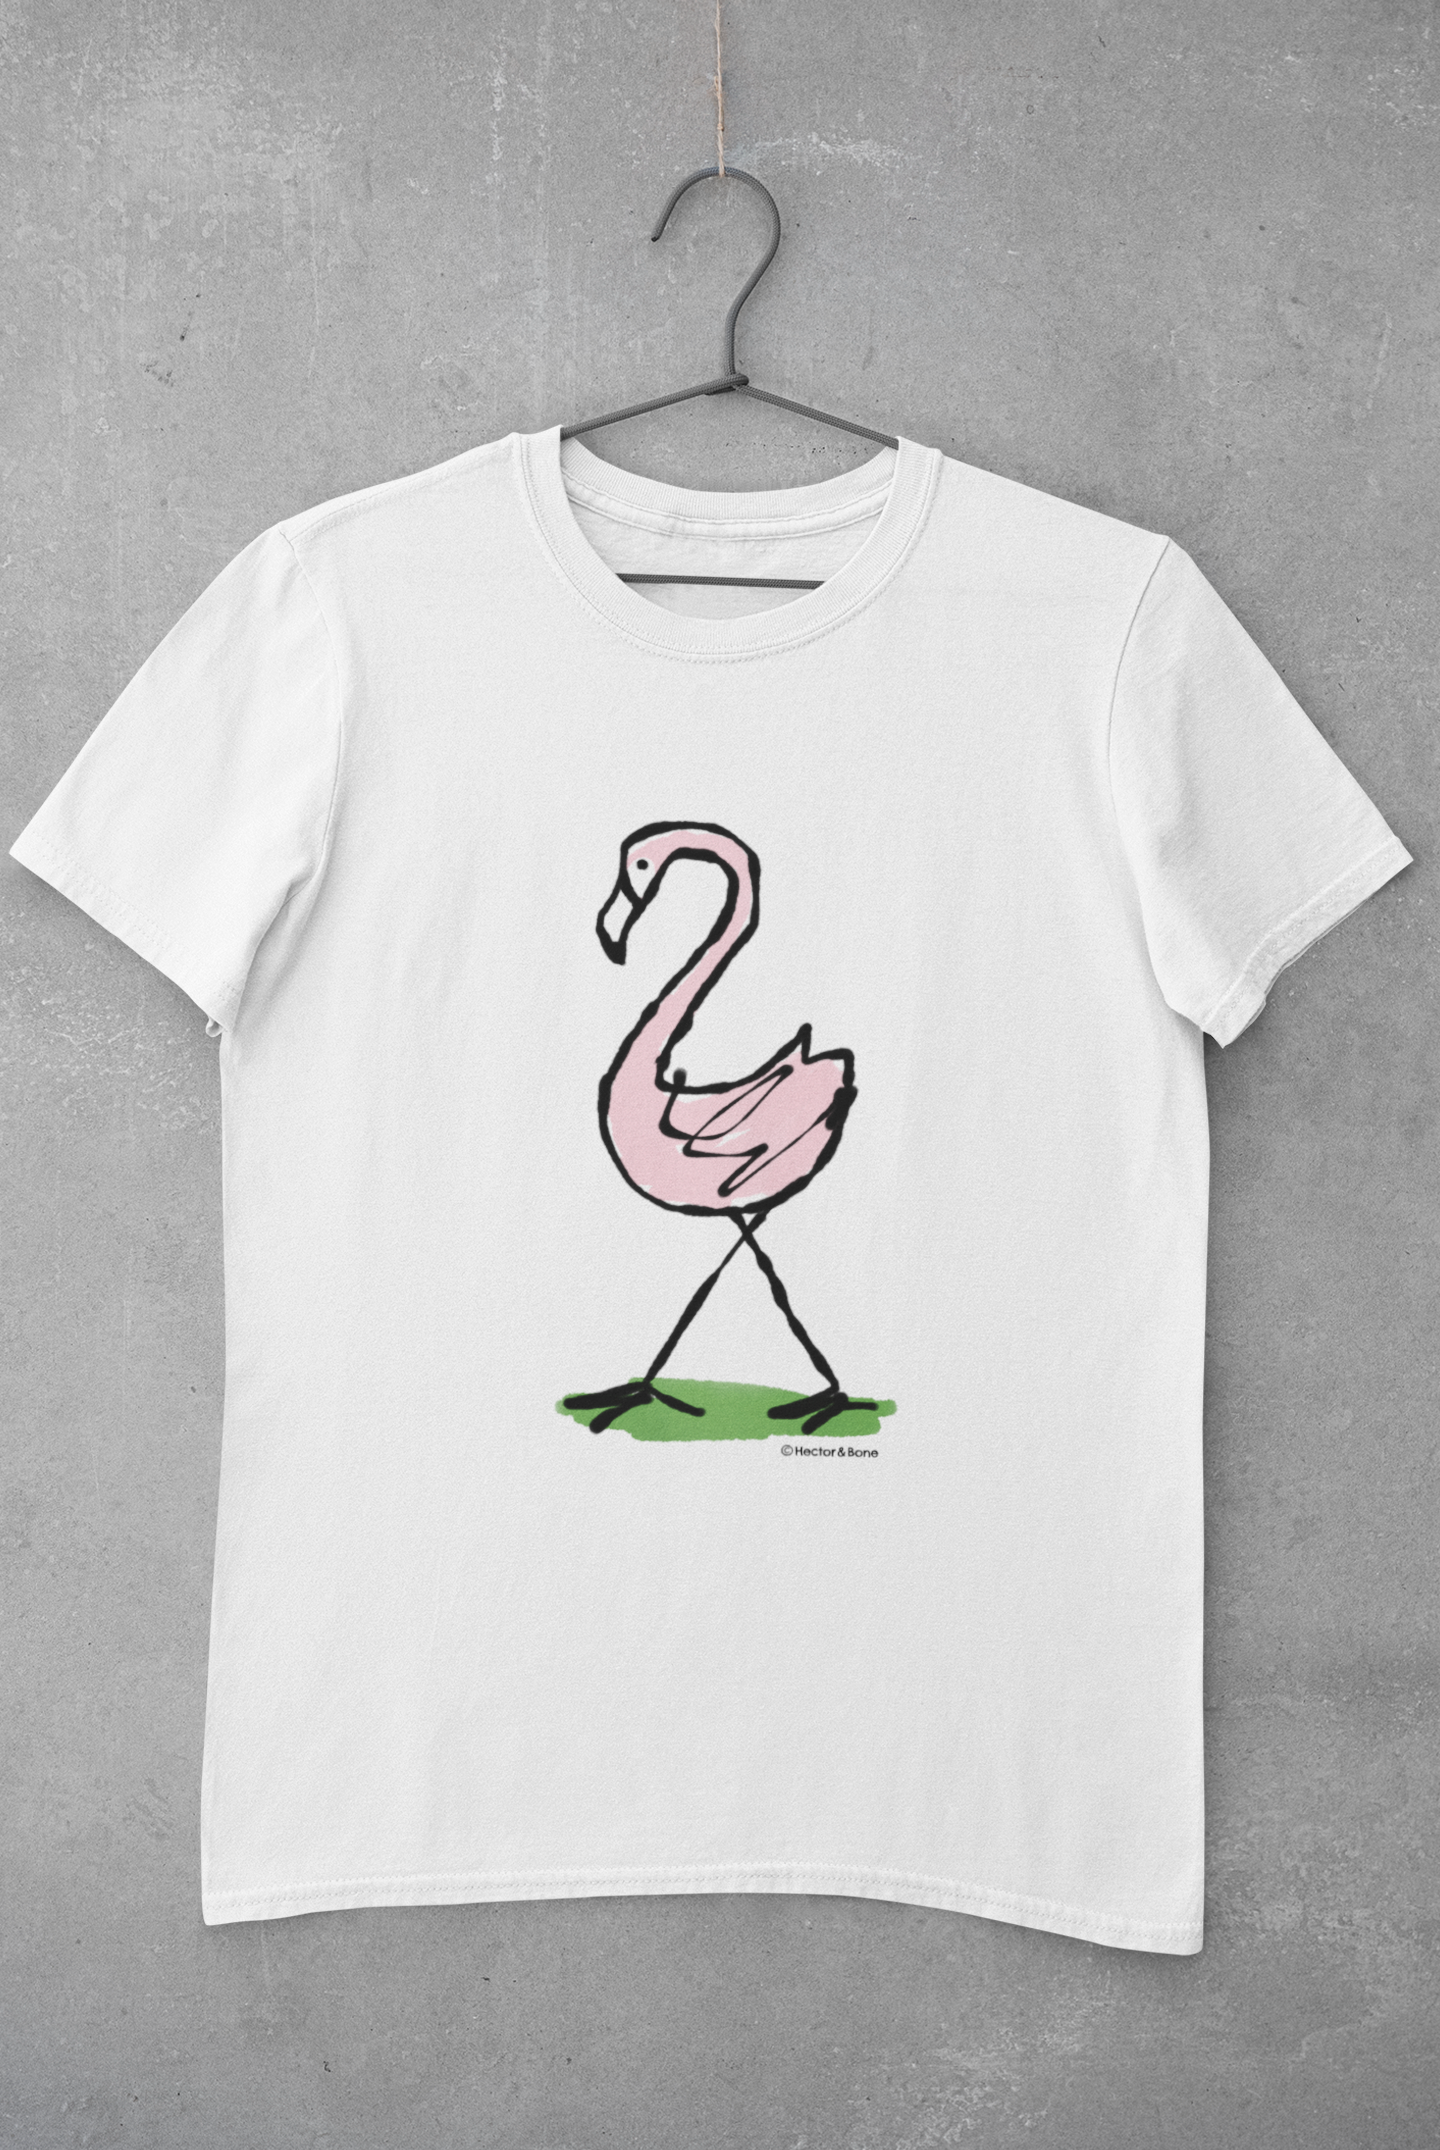 Pink Flamingo T-shirt - Illustrated flamingo design on white vegan cotton unisex t-shirts by Hector and Bone 